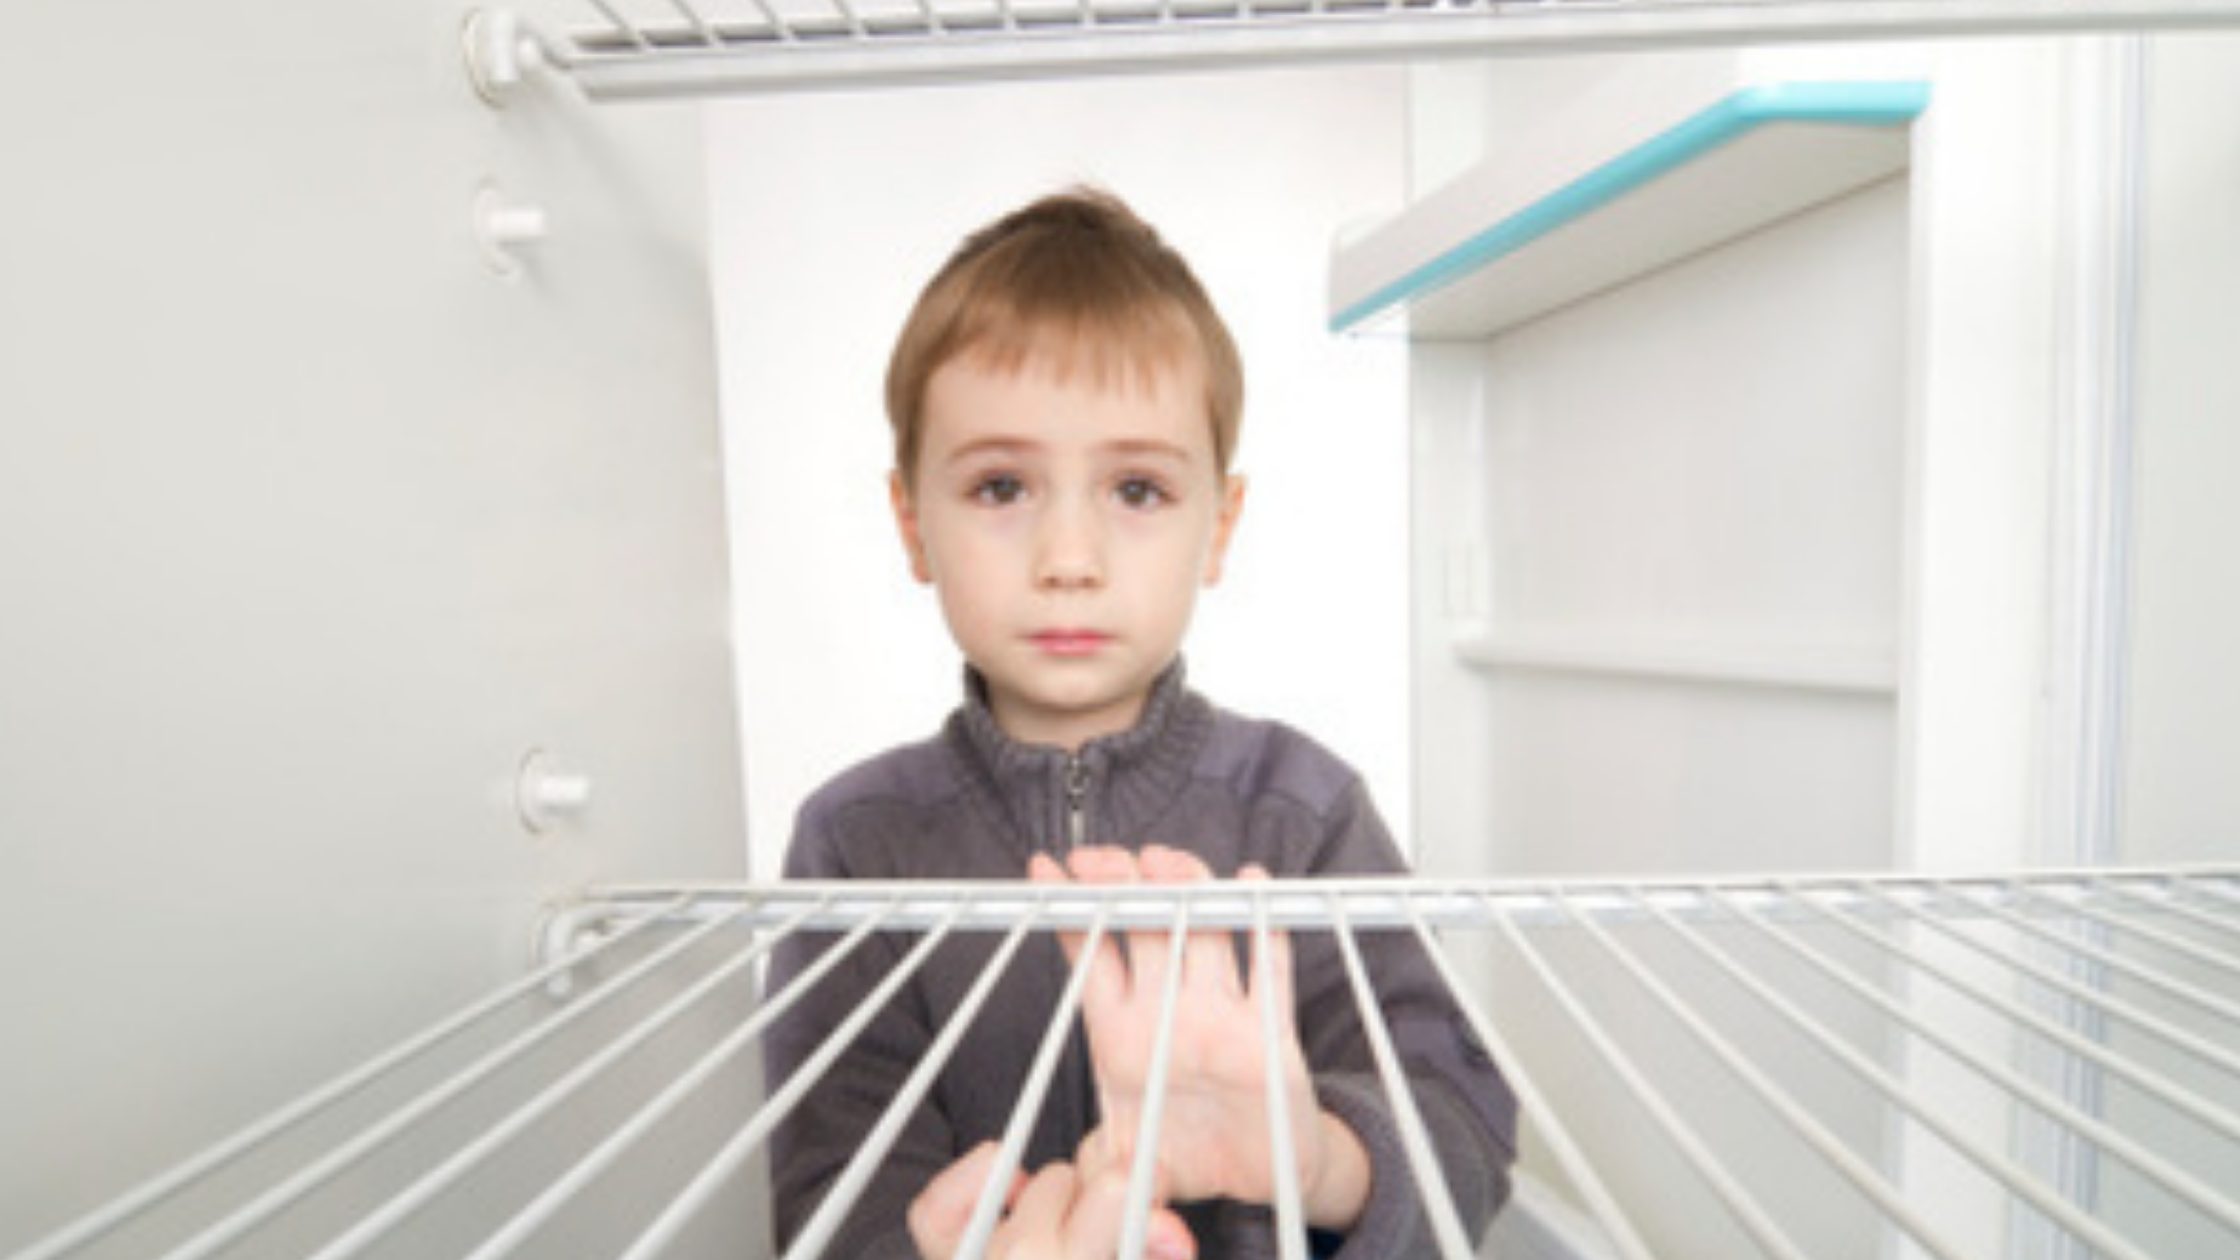 Boy with empty fridge